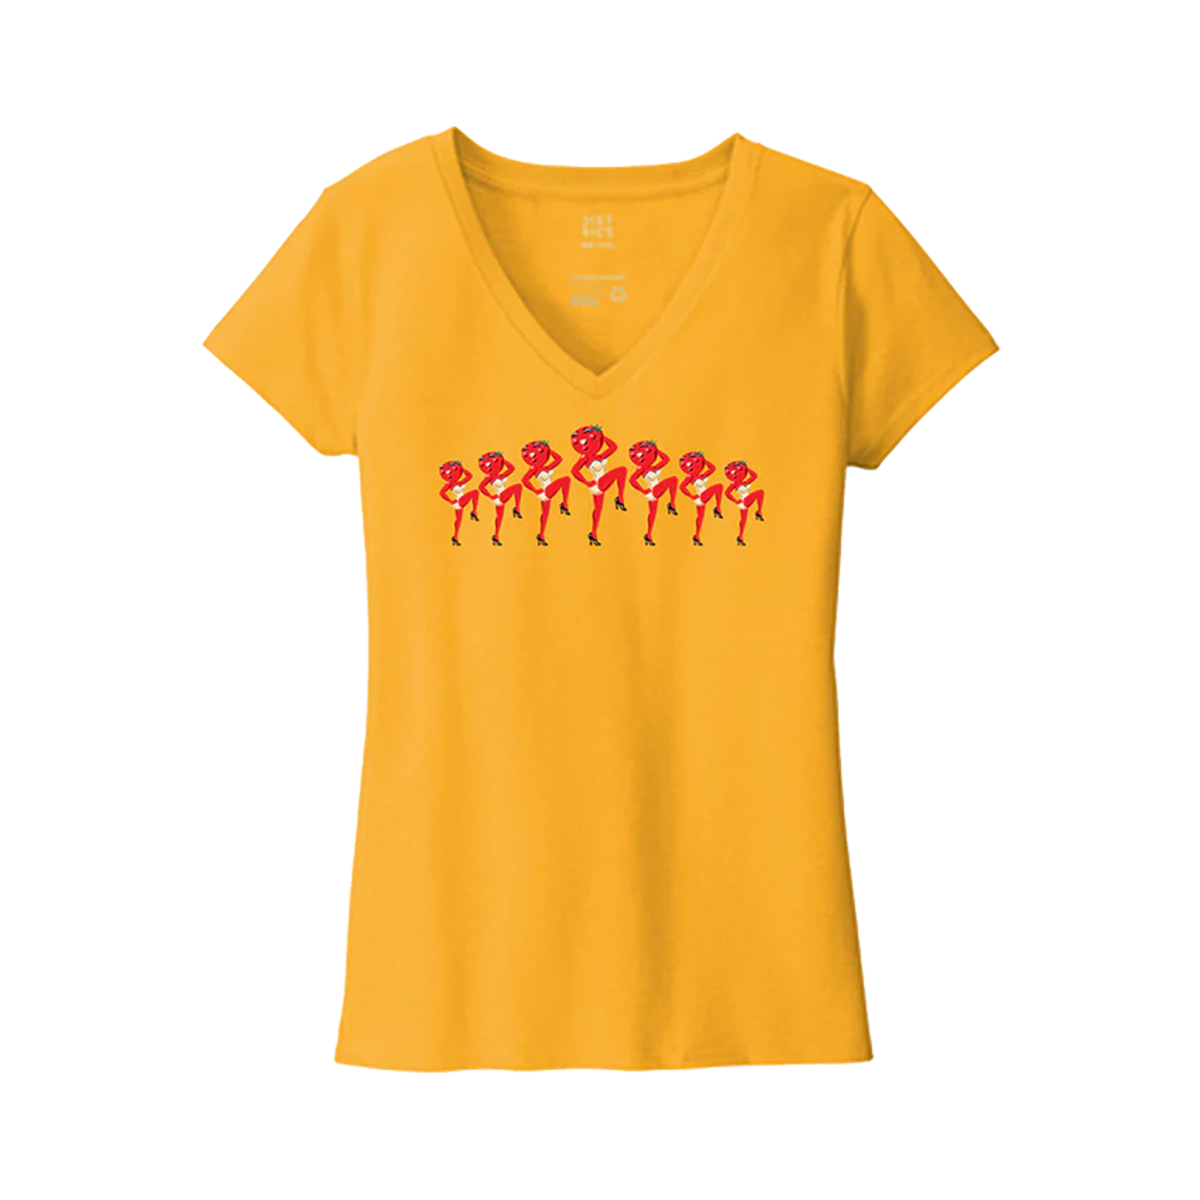 Chorus Line Women's V-Neck T-Shirt